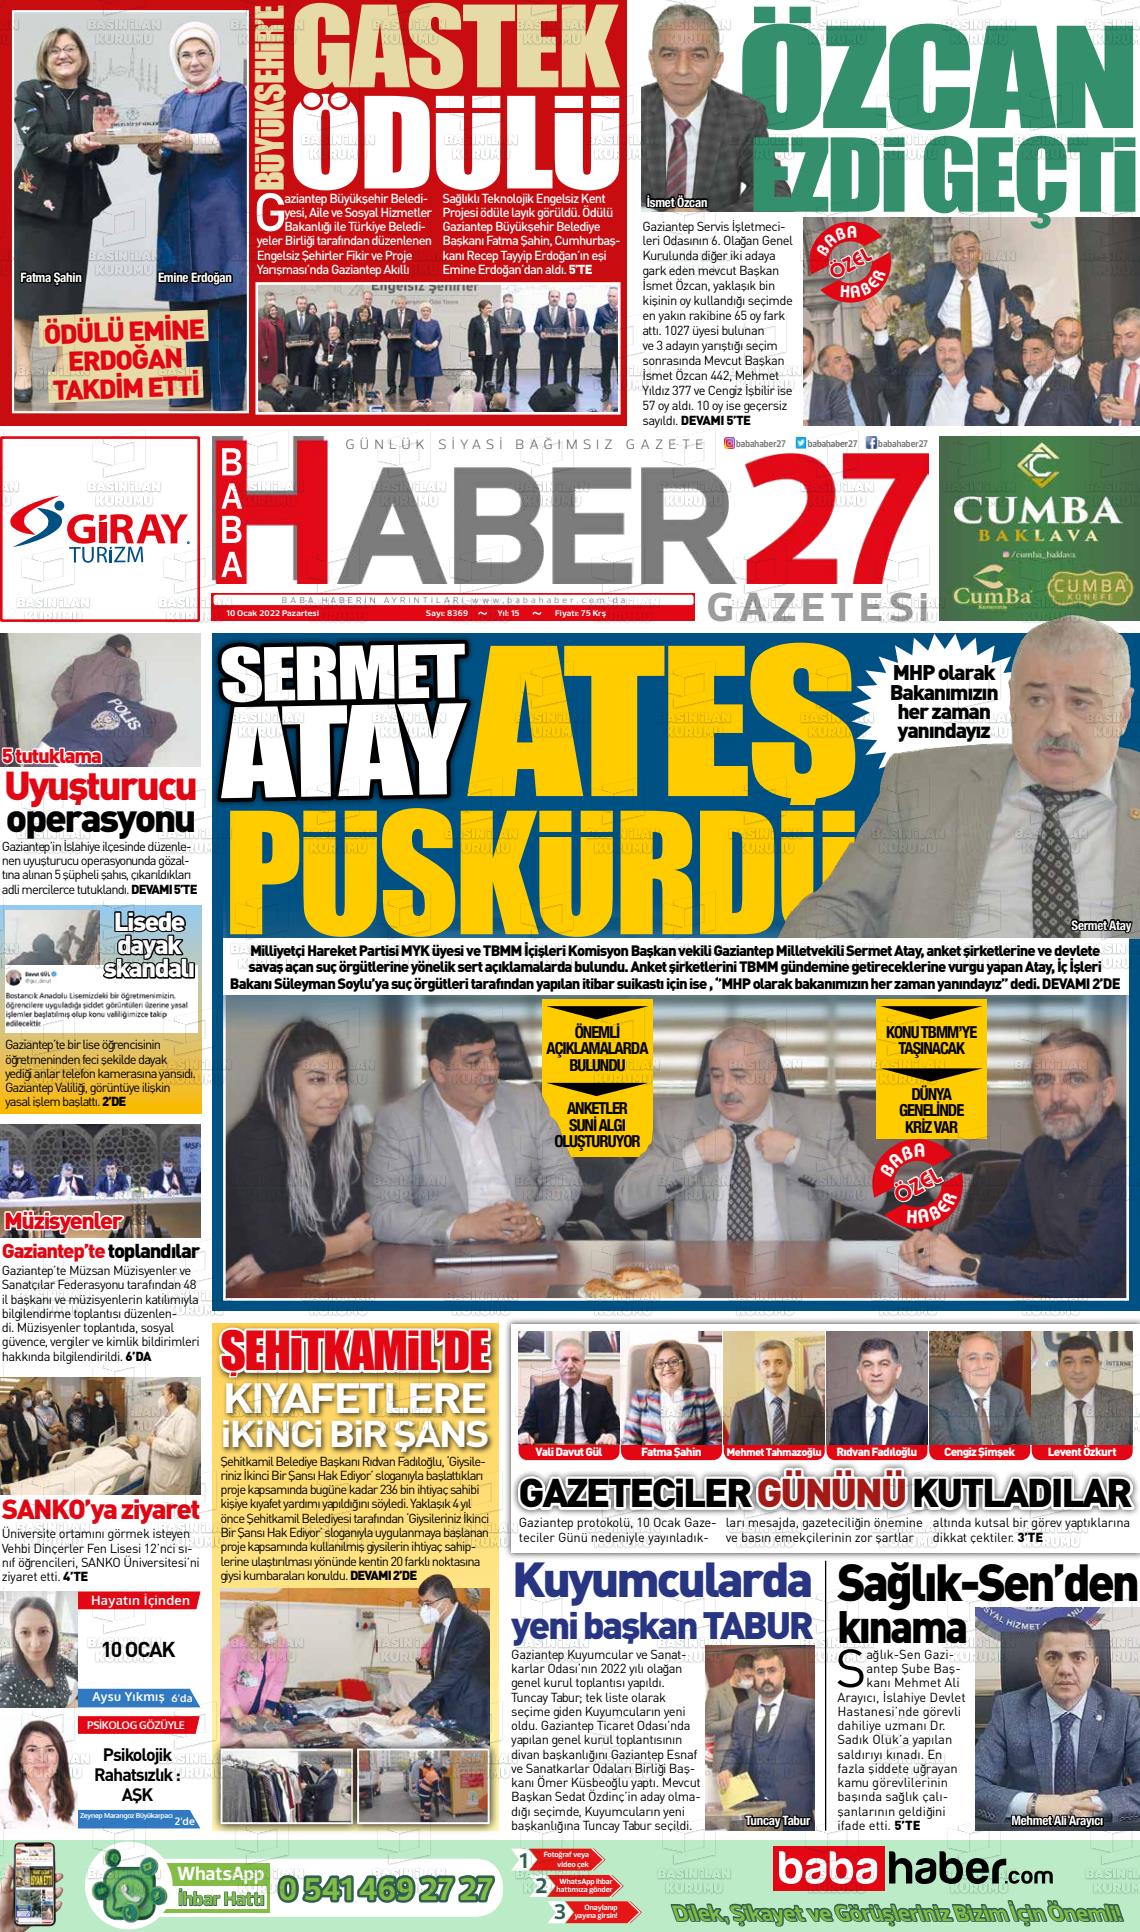 10 Ocak 2022 Gaziantep Hakimiyet Gazete Manşeti